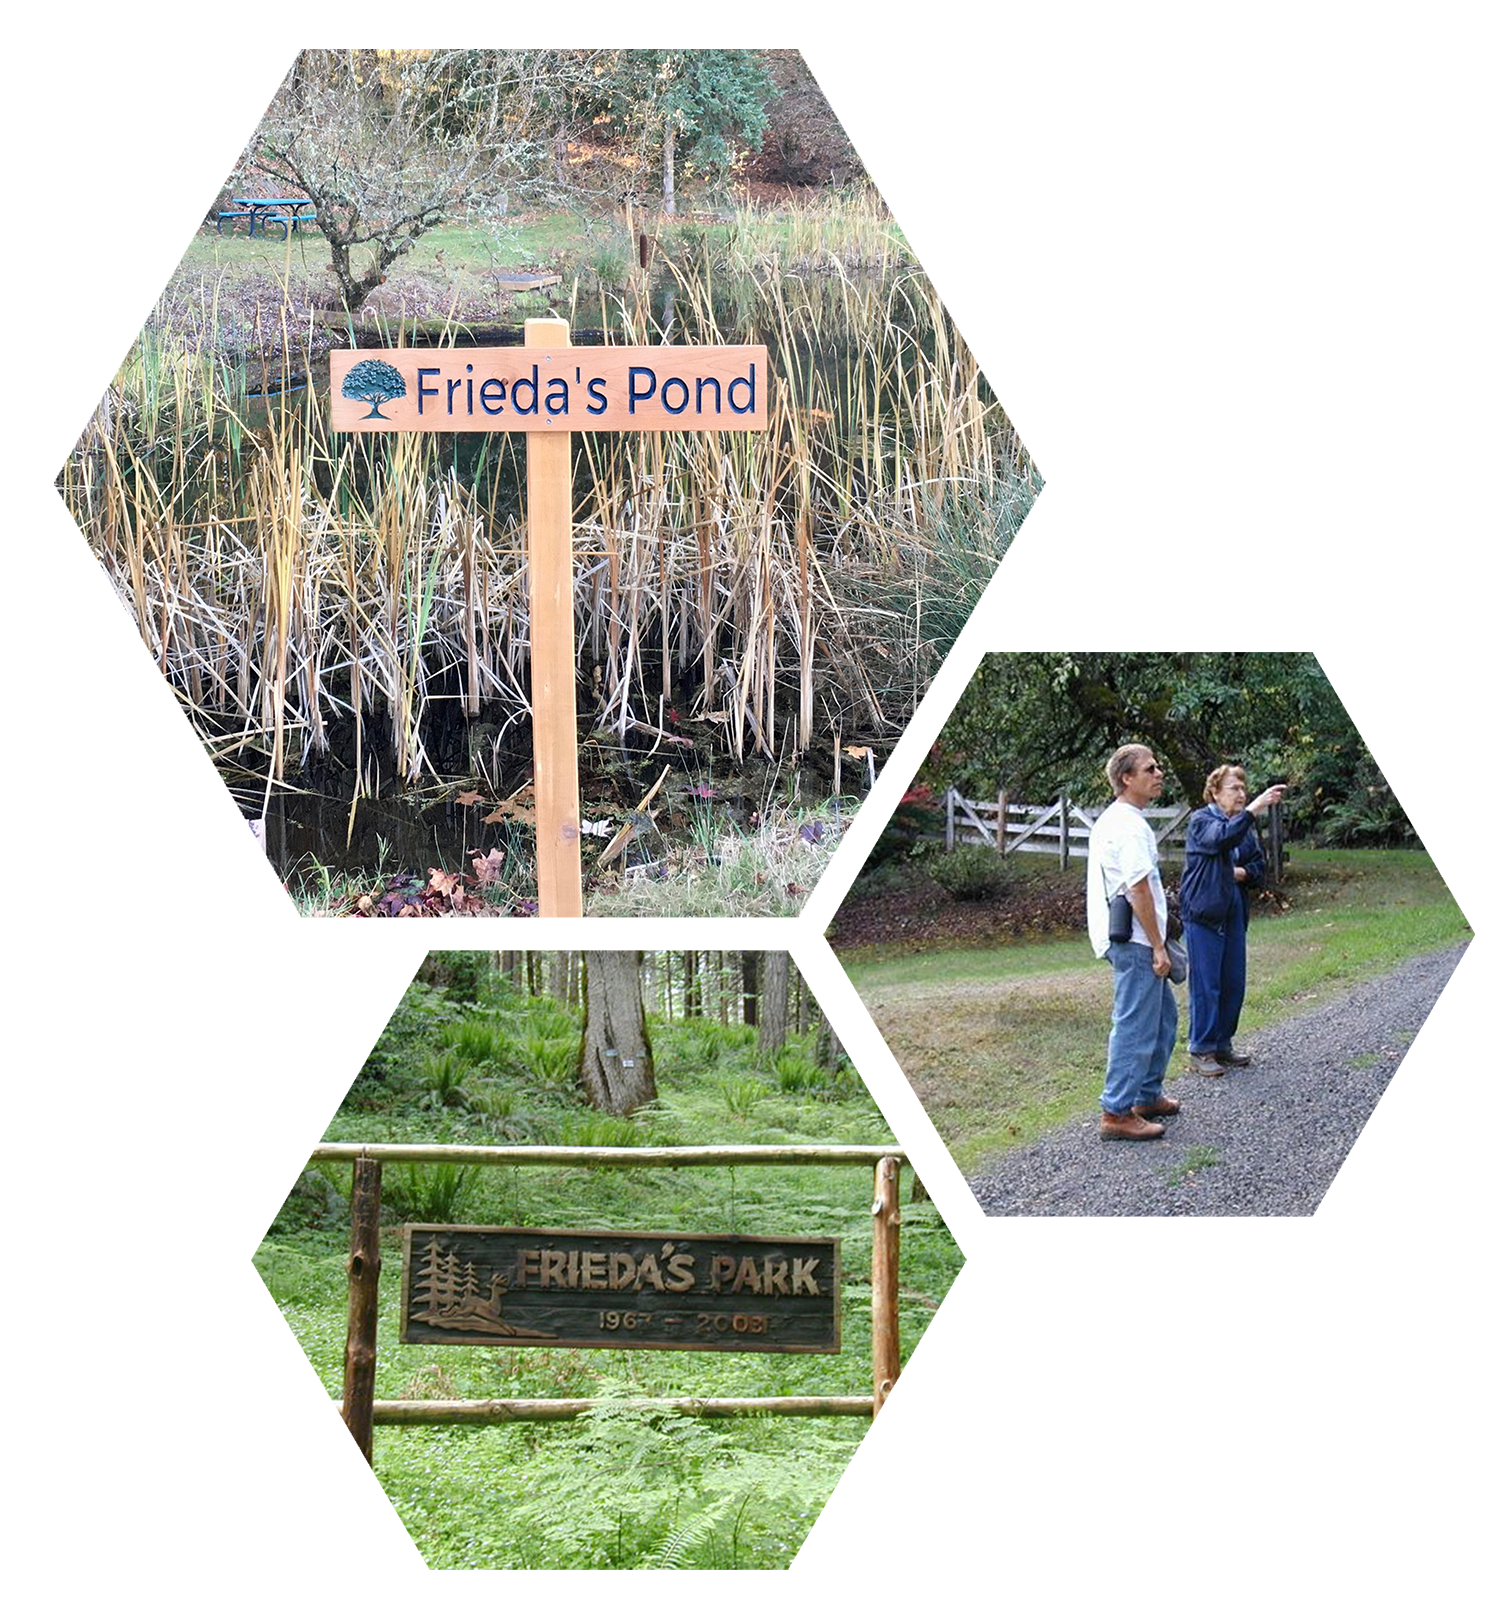 A collage of Frieda's Pond, Freida's Park, and Frieda Miller